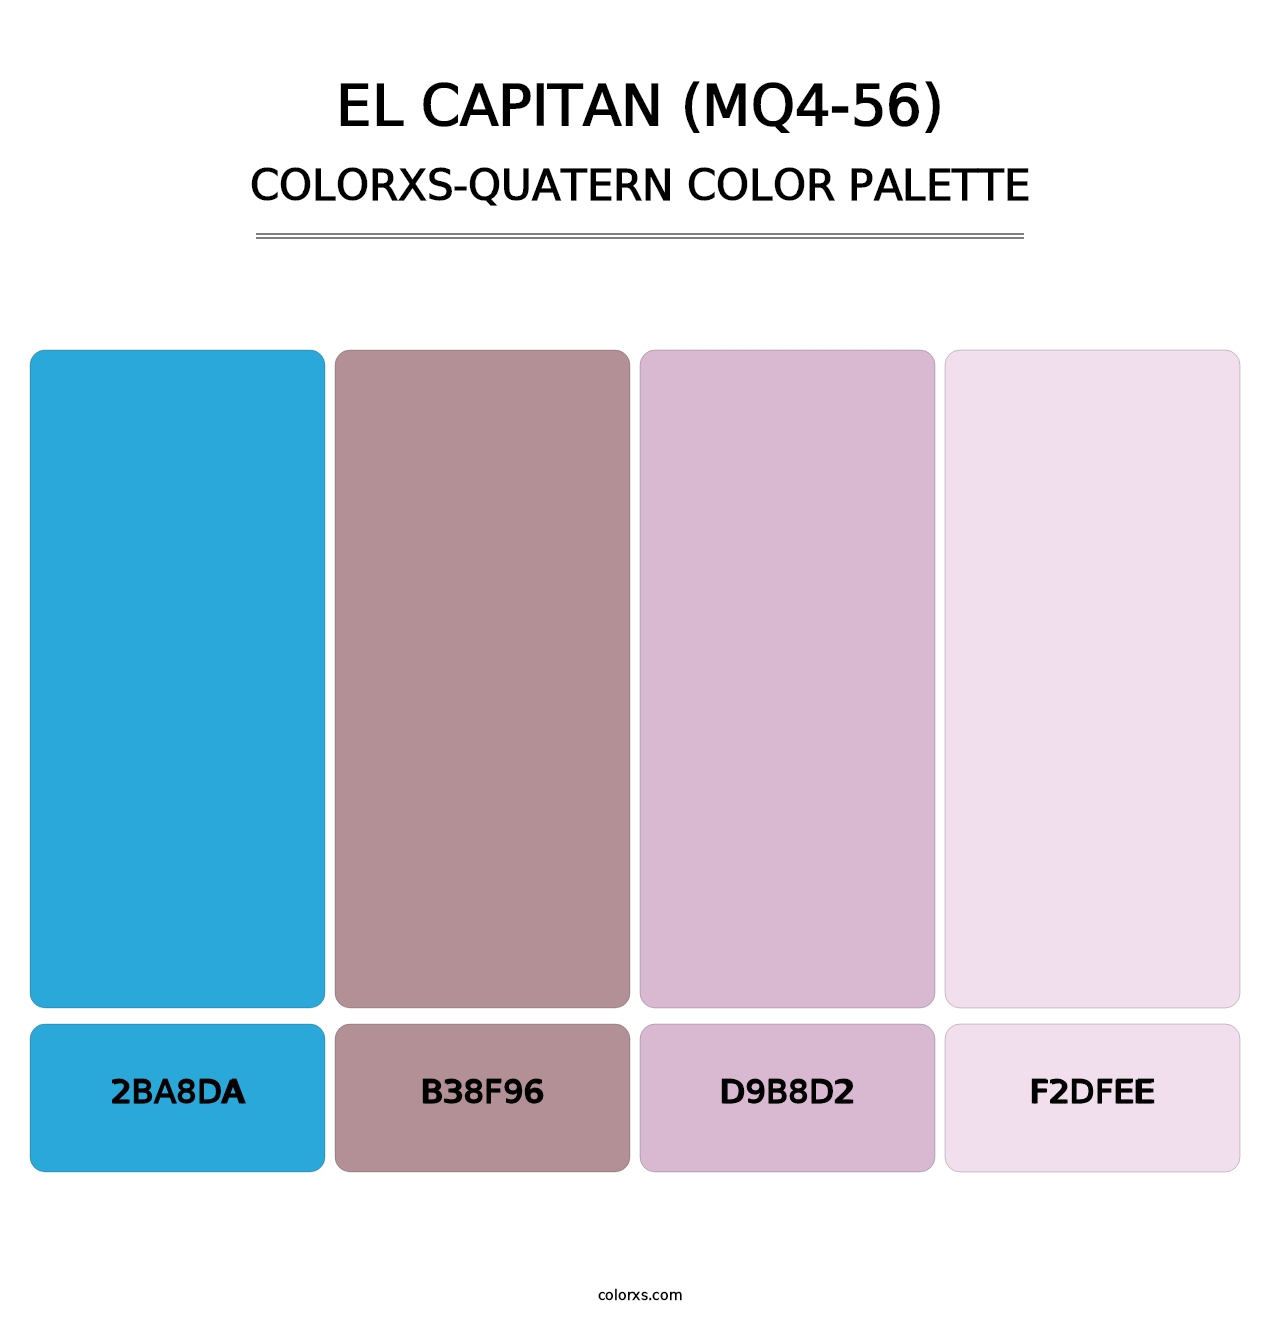 El Capitan (MQ4-56) - Colorxs Quatern Palette